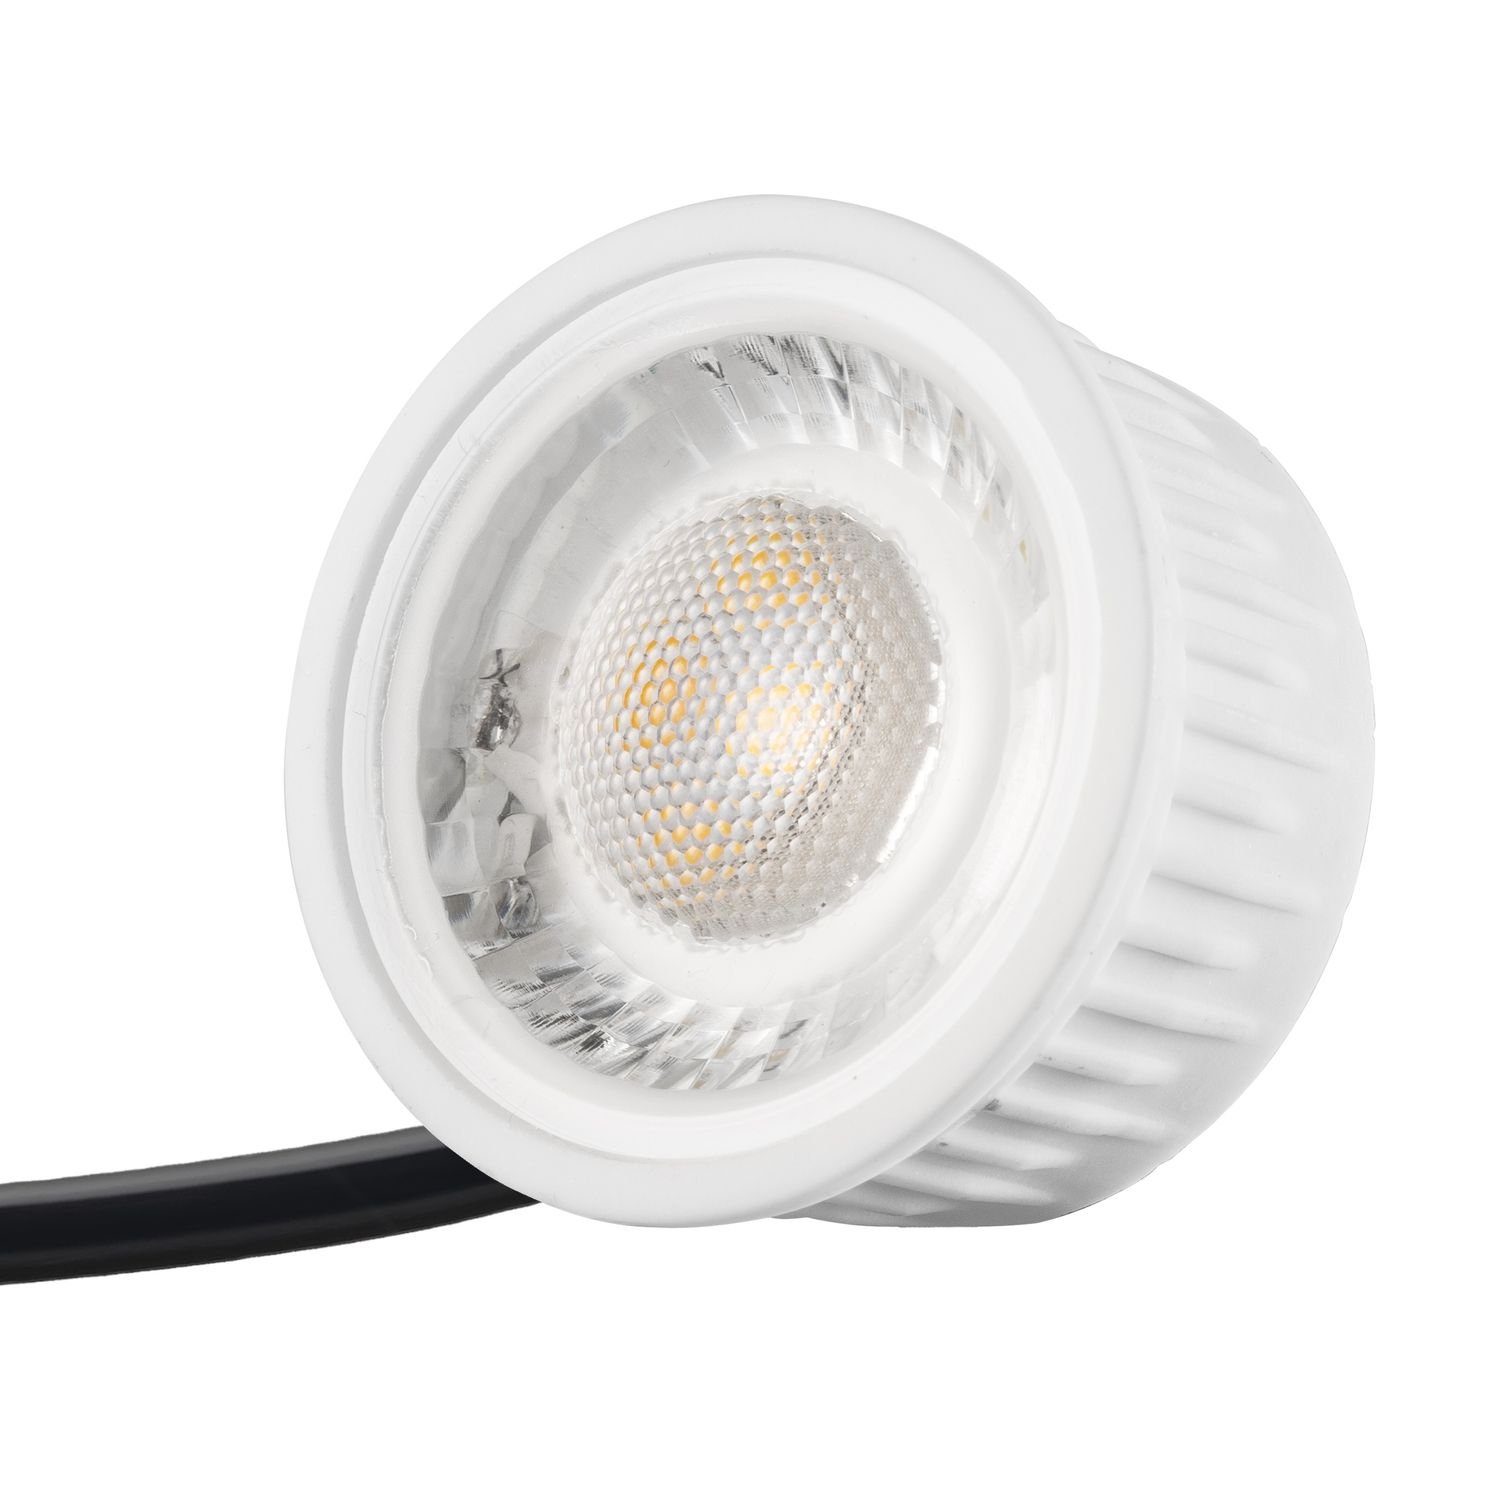 LEDANDO LED Einbaustrahler extra in mit Set LED v Leuchtmittel Einbaustrahler 5W chrom 10er flach